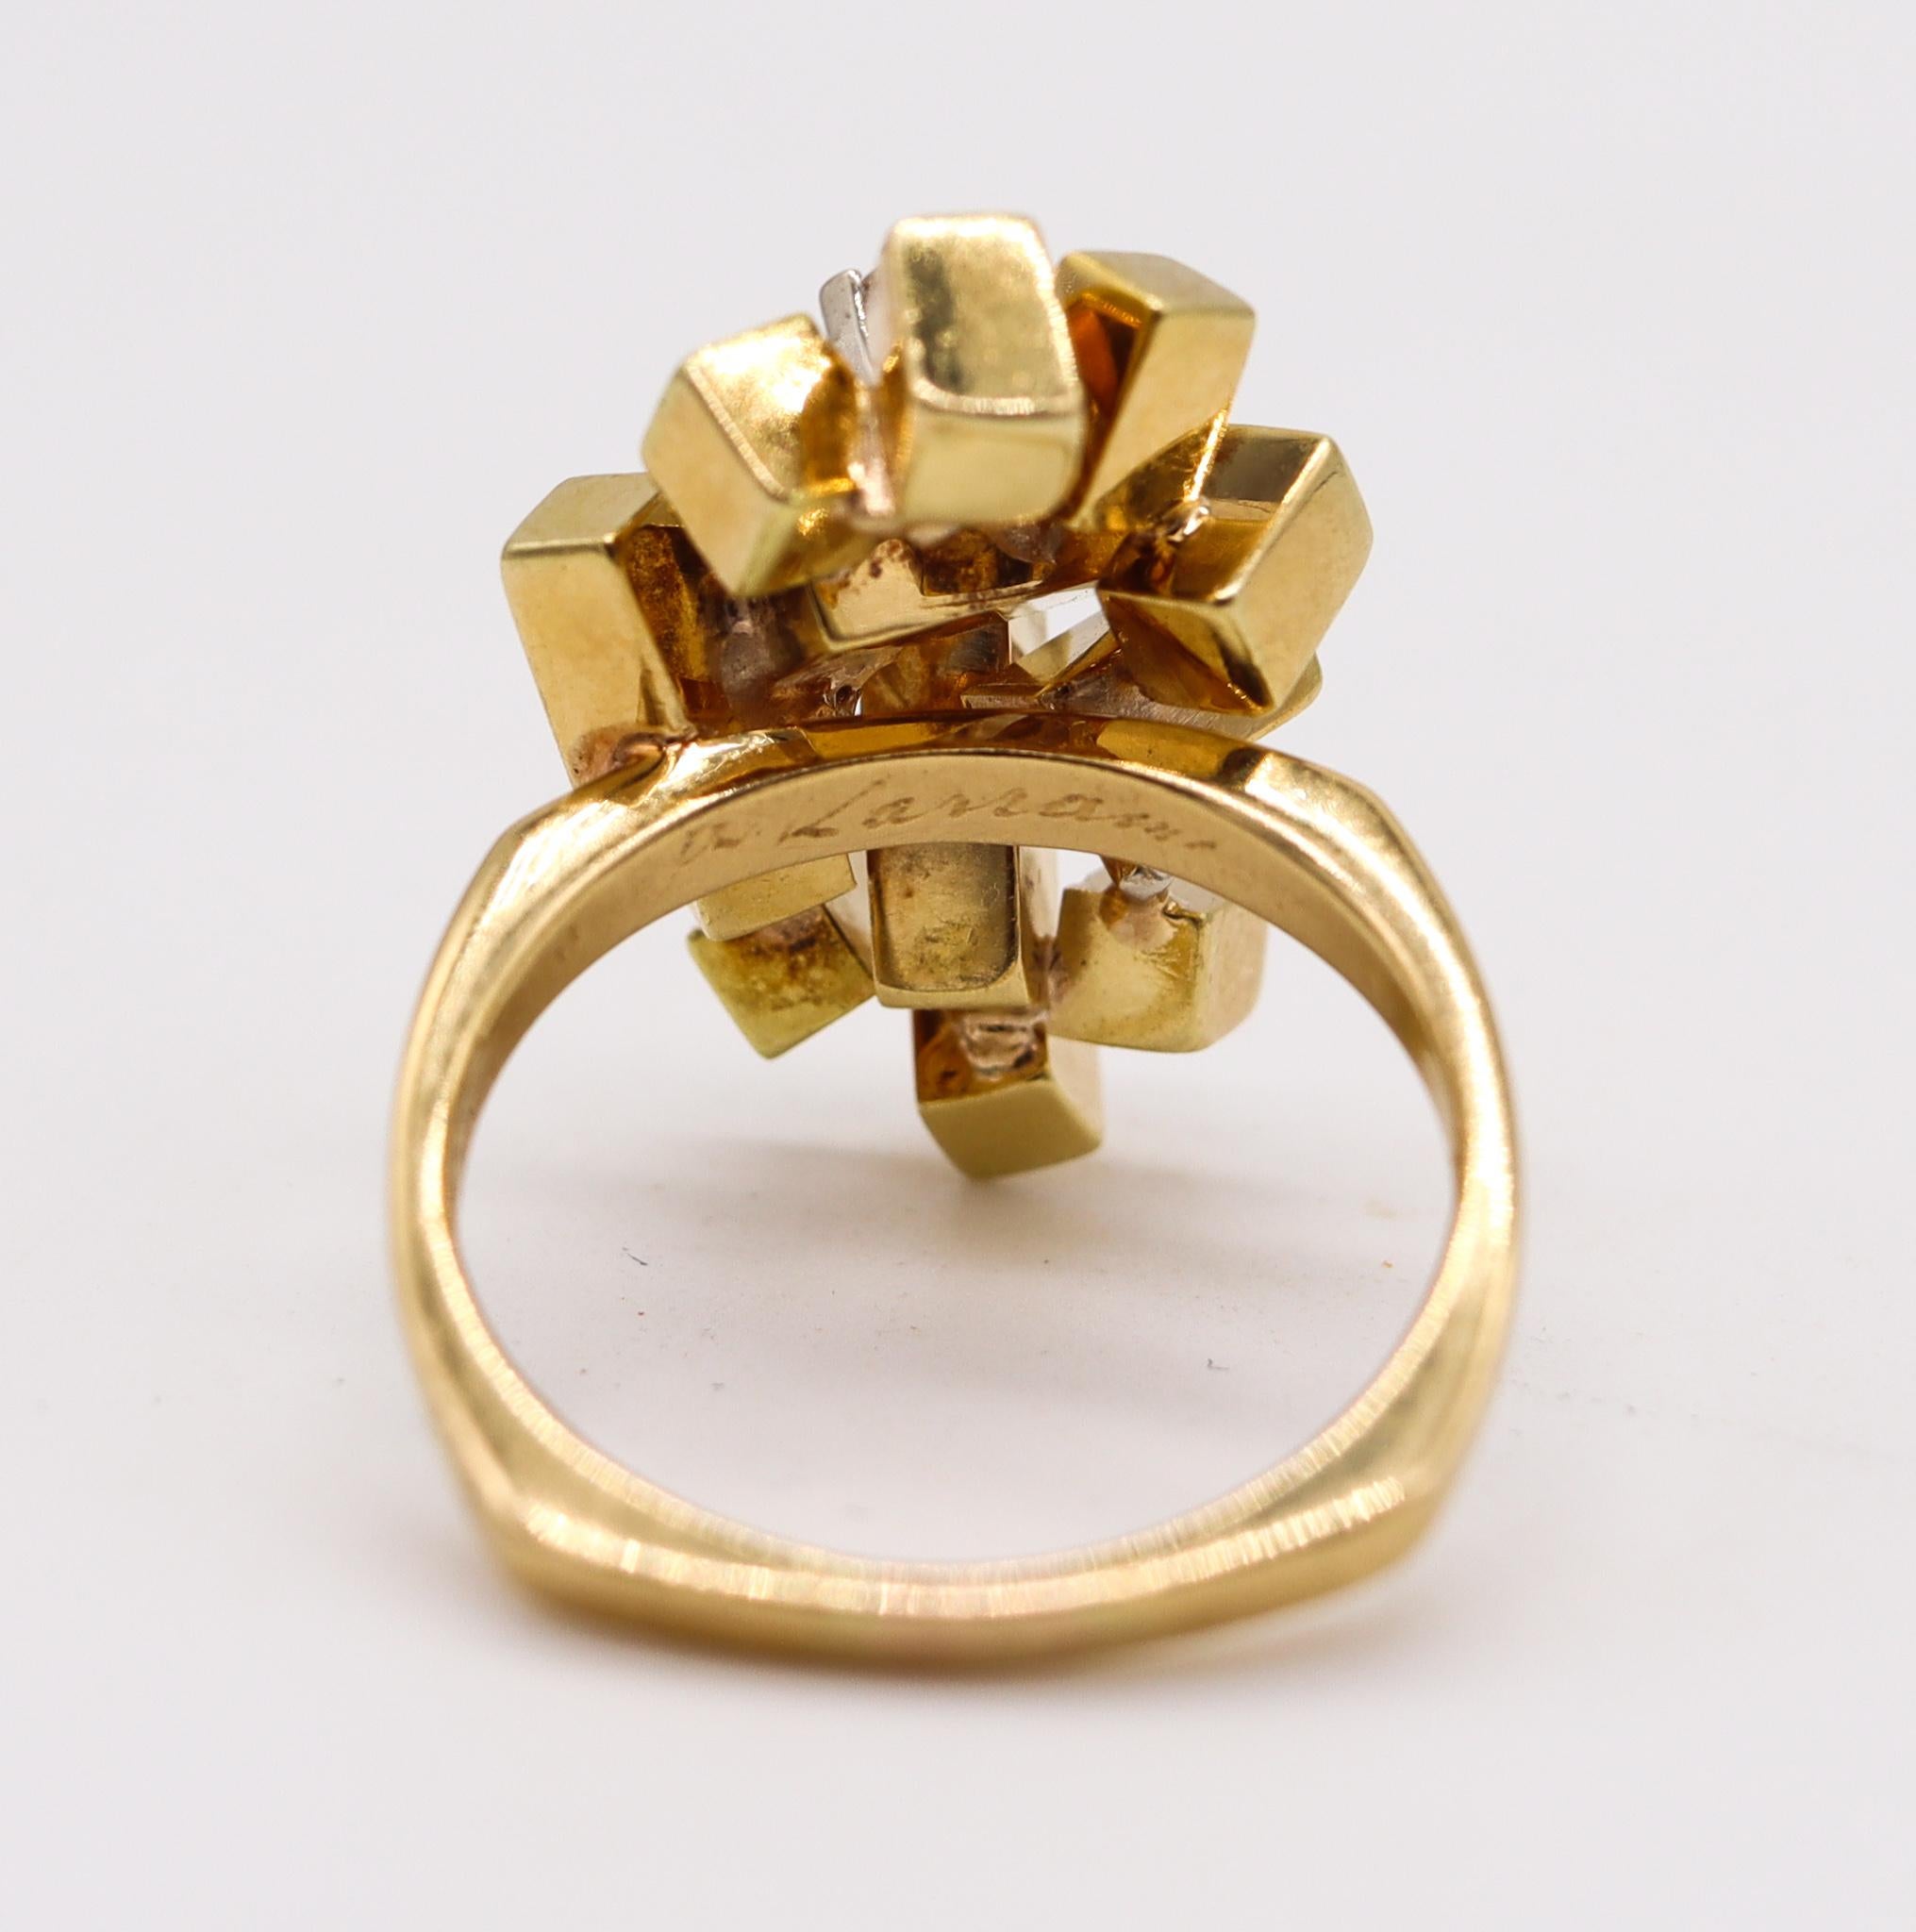 Brilliant Cut Alfred Karram 1970 Brutalist Geometric Cubic Ring in 18 Kt Gold with Diamonds